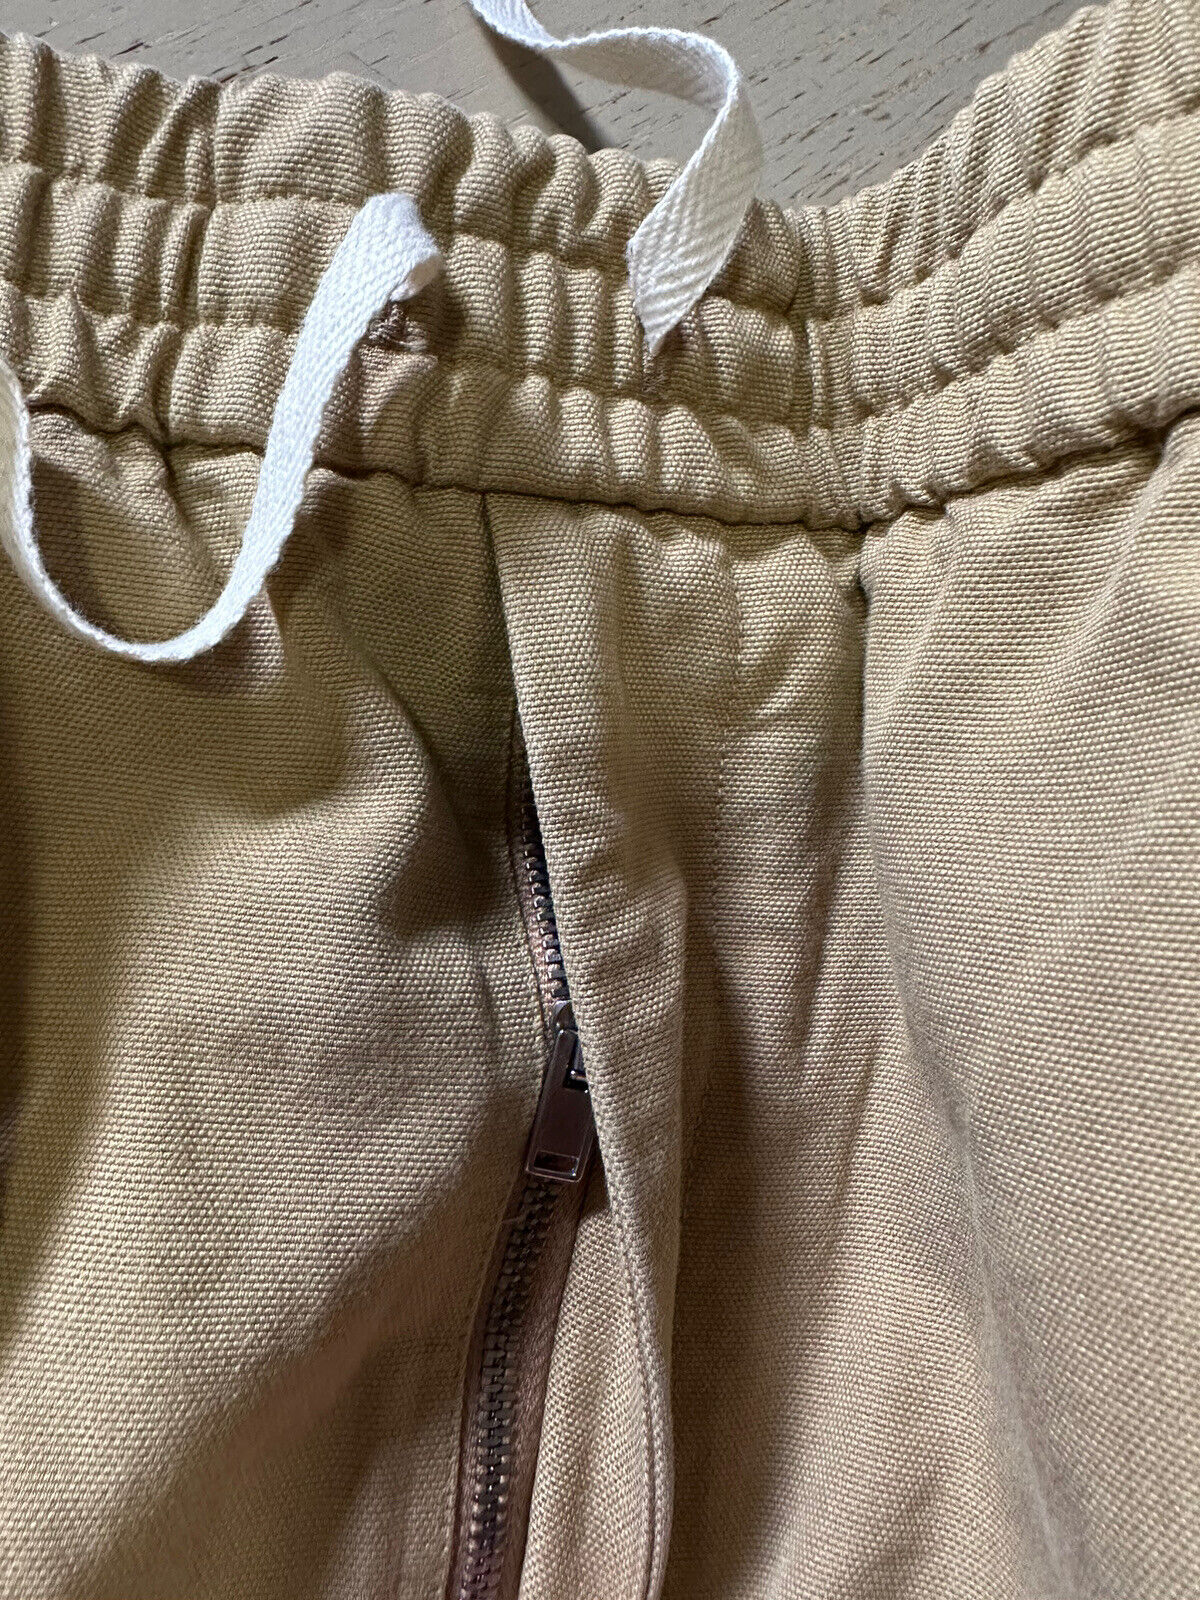 NWT $1400 Gucci Men Lweight Cotton Canvas Short Pants DK Beige/ Mul. 40 US/56 Eu